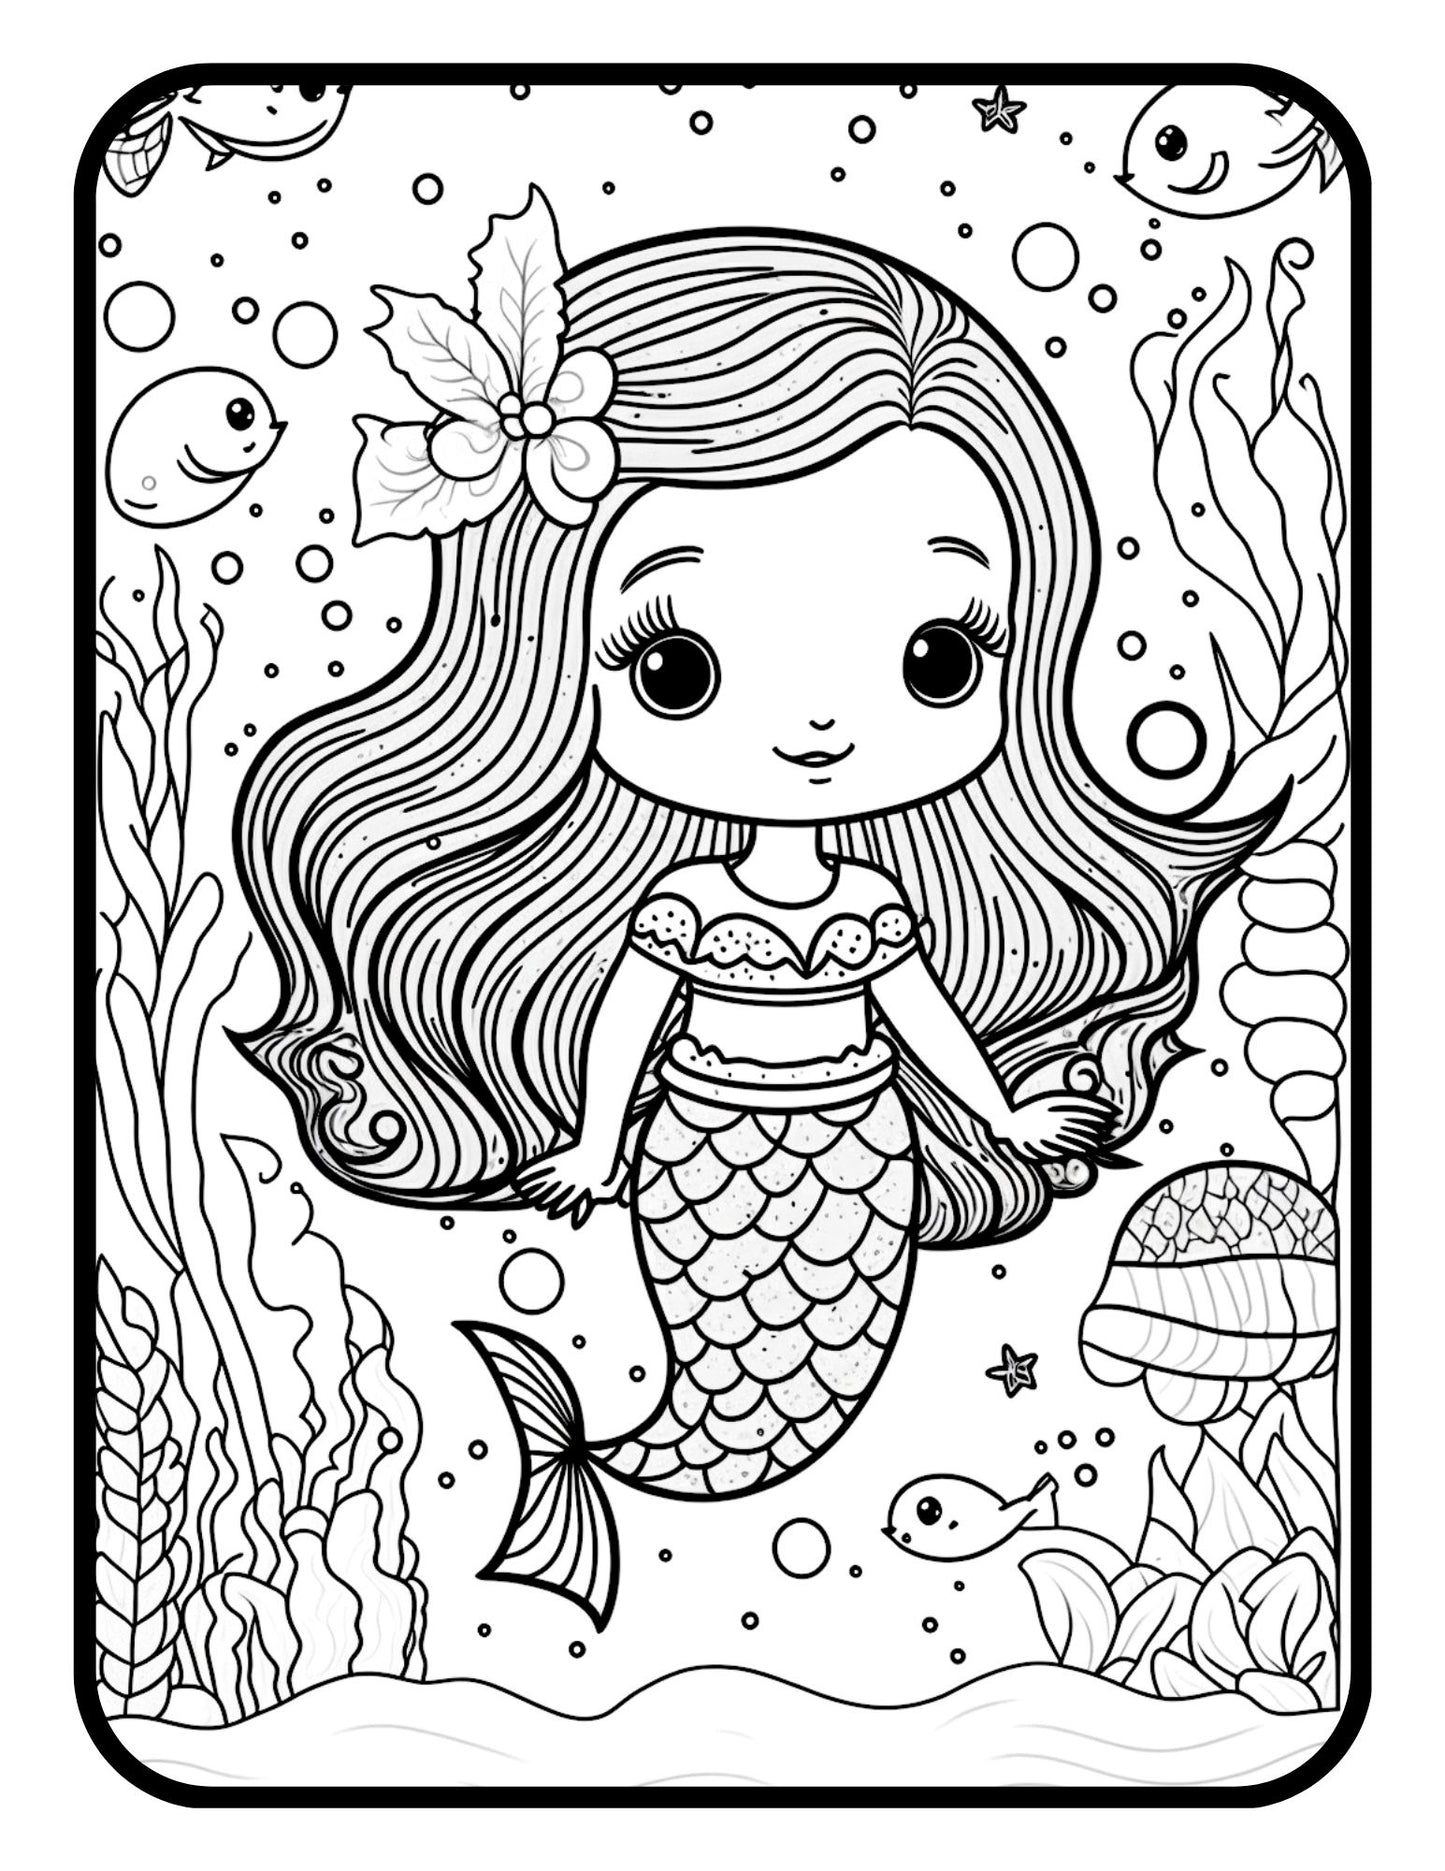 Mermaid Gift For Girls Mermaid Coloring Books For Girls Mermaid Activity Book For Kids Mermaid Books For Girls Age Mermaid Gifts For Women